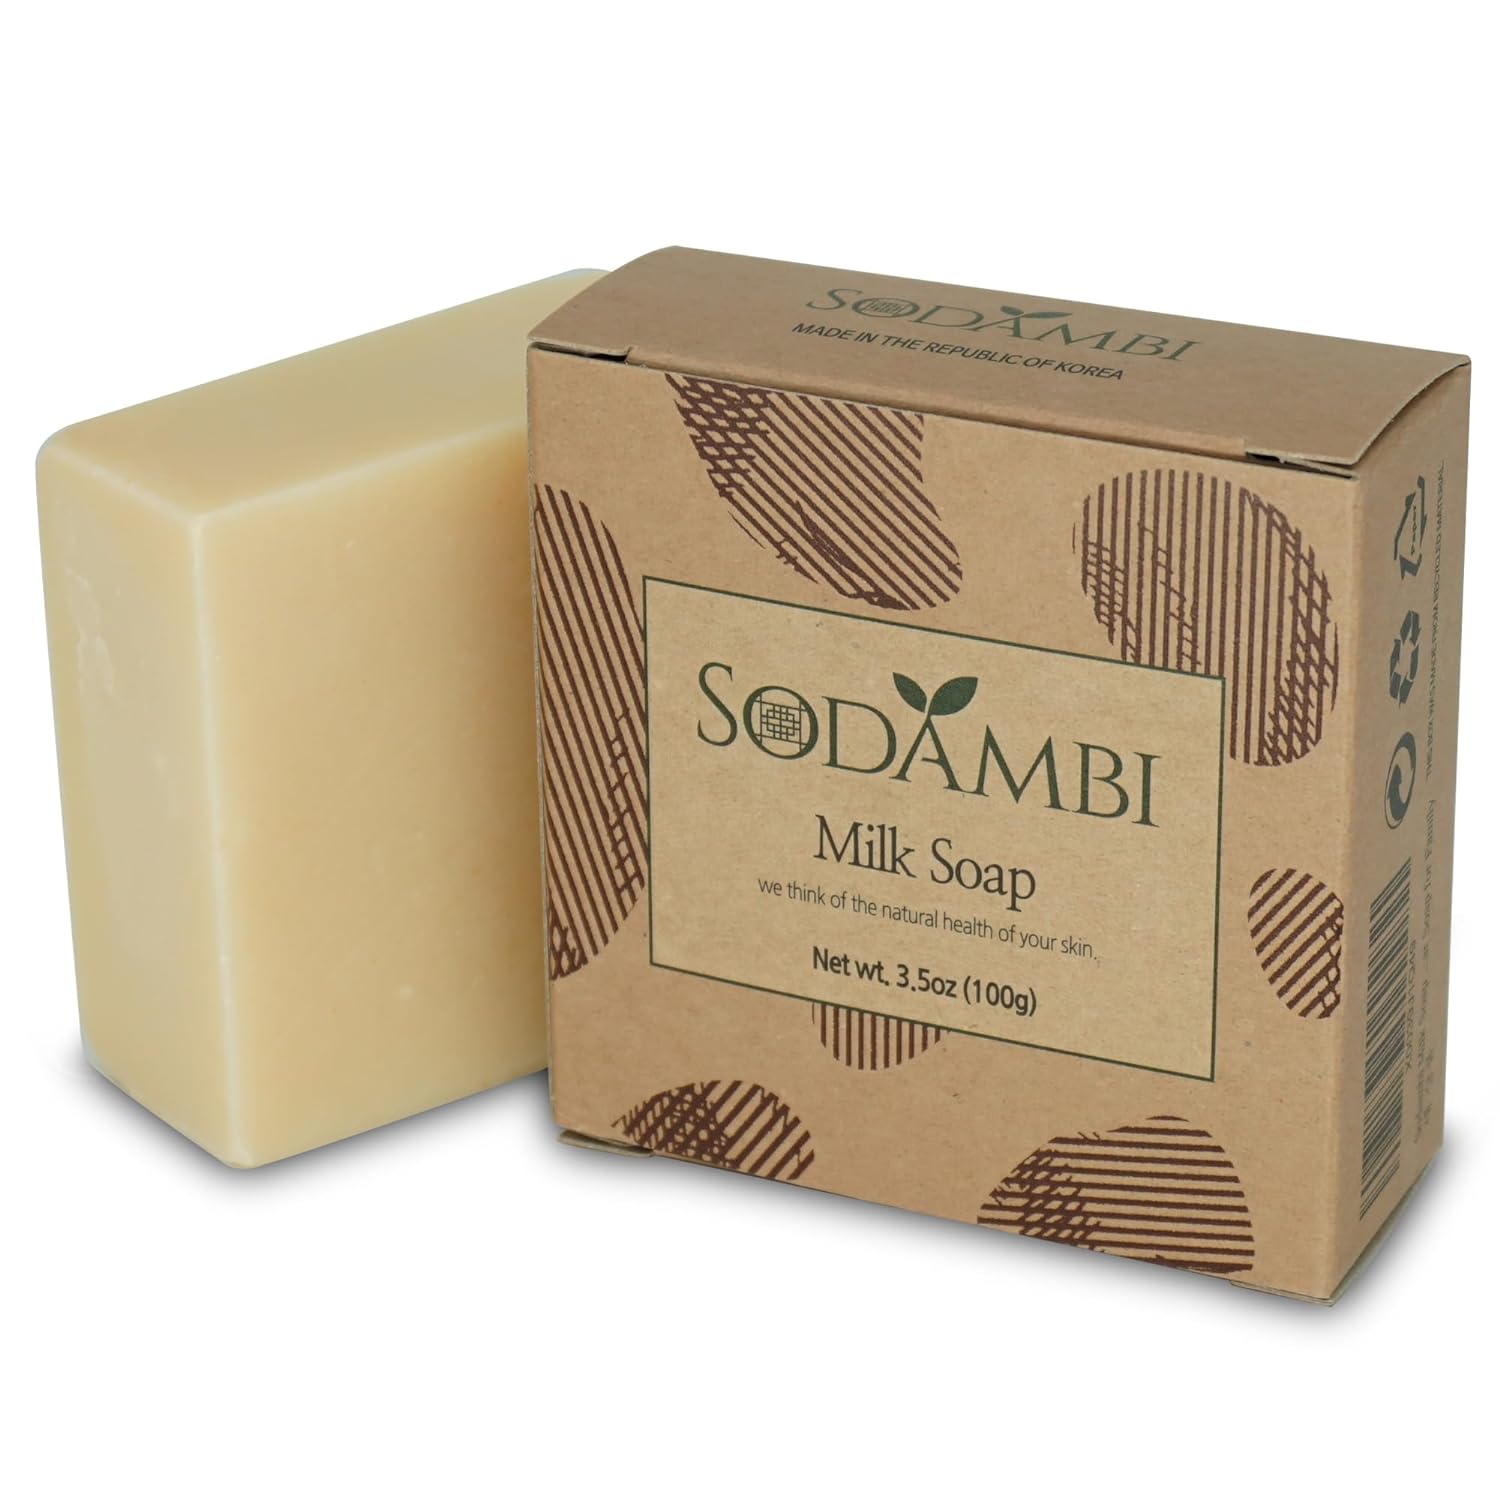 sodambi Milk Soap – 3.5Oz Soap Bar – All Natural Body Soap - Luxurious Handmade Soap for Face an